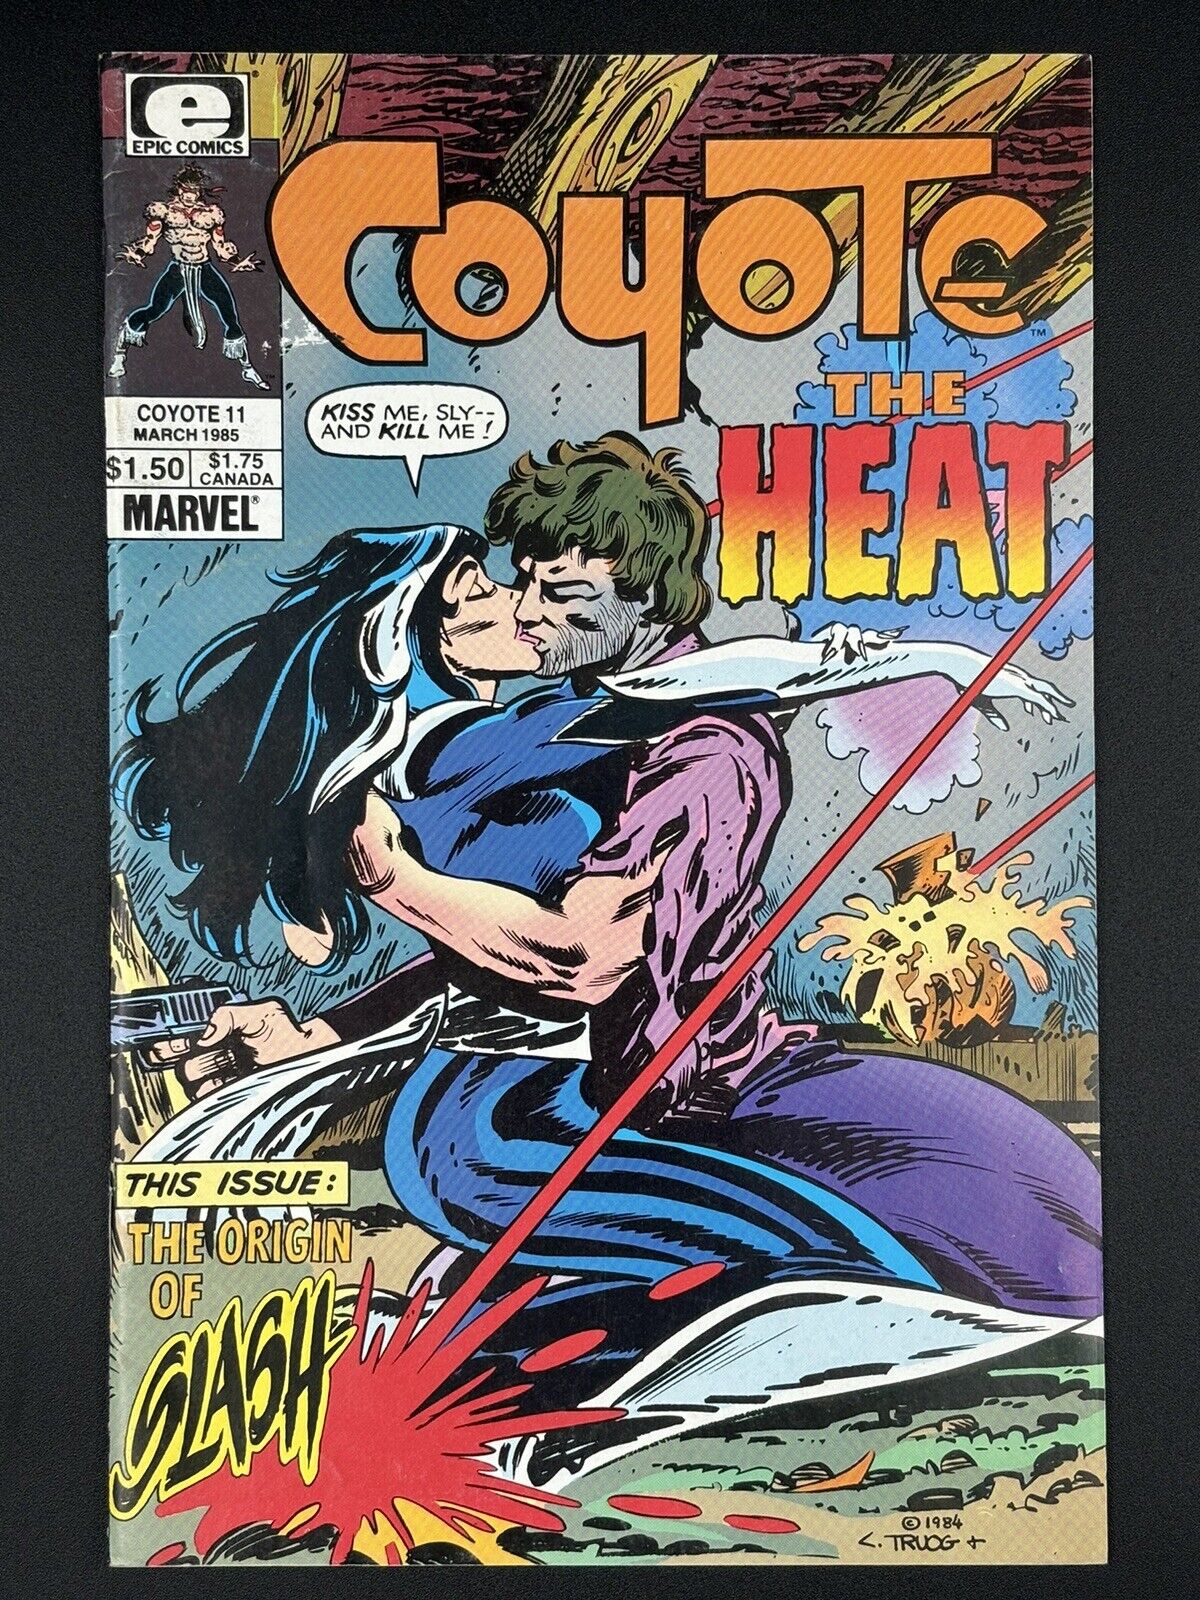 Coyote #11  1st Published Todd McFarlane, 1985 Epic Comics